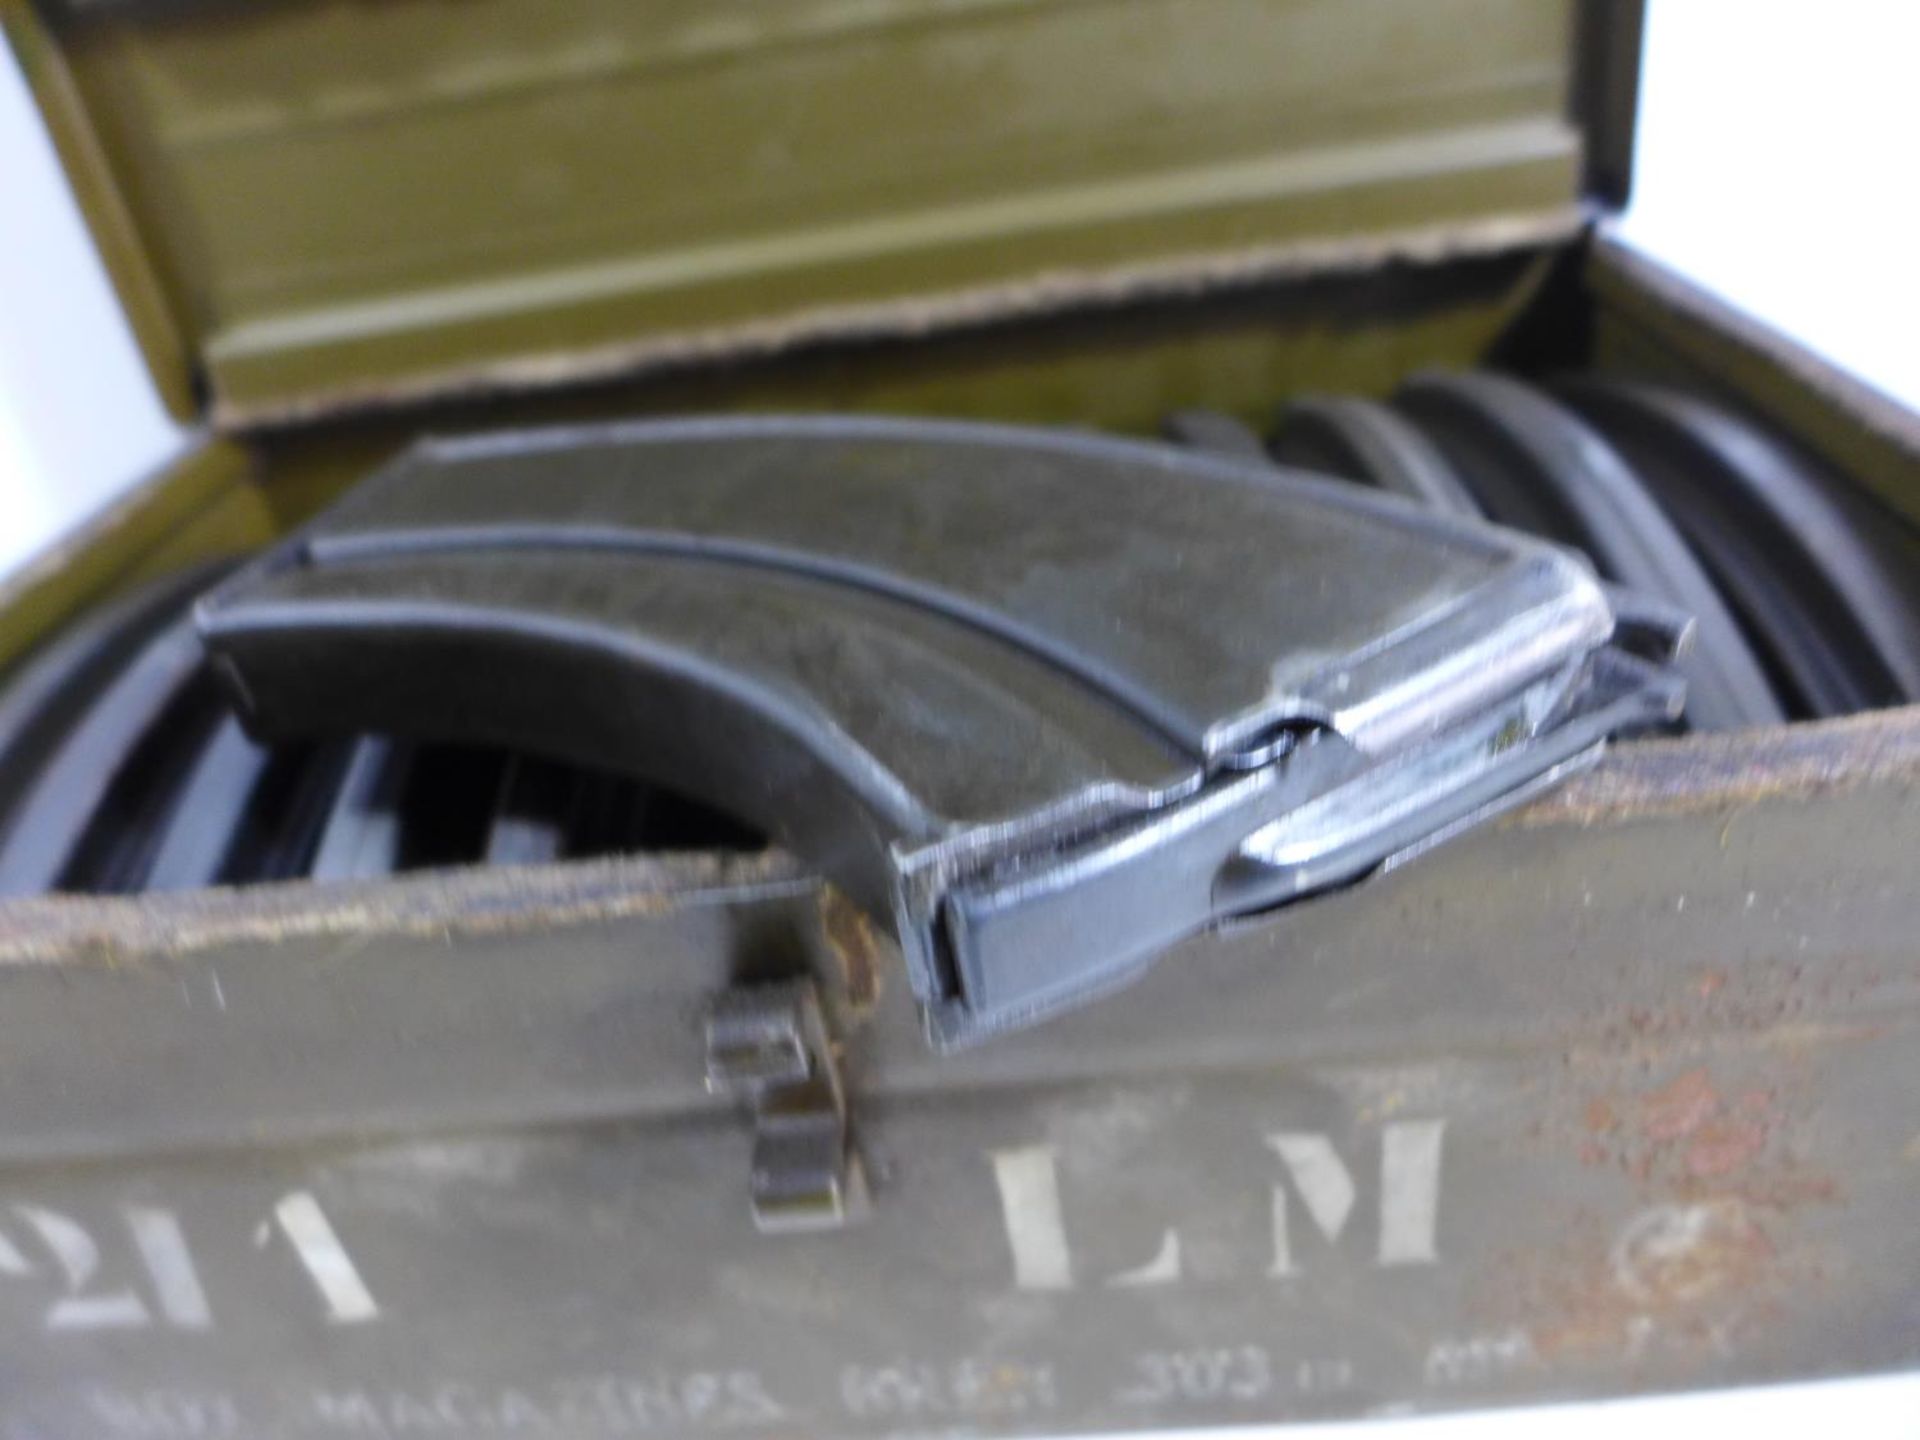 A .303 BREN GUN MAGAZINE BOX COMPLETE WITH TWELVE MAGAZINES - Image 2 of 4